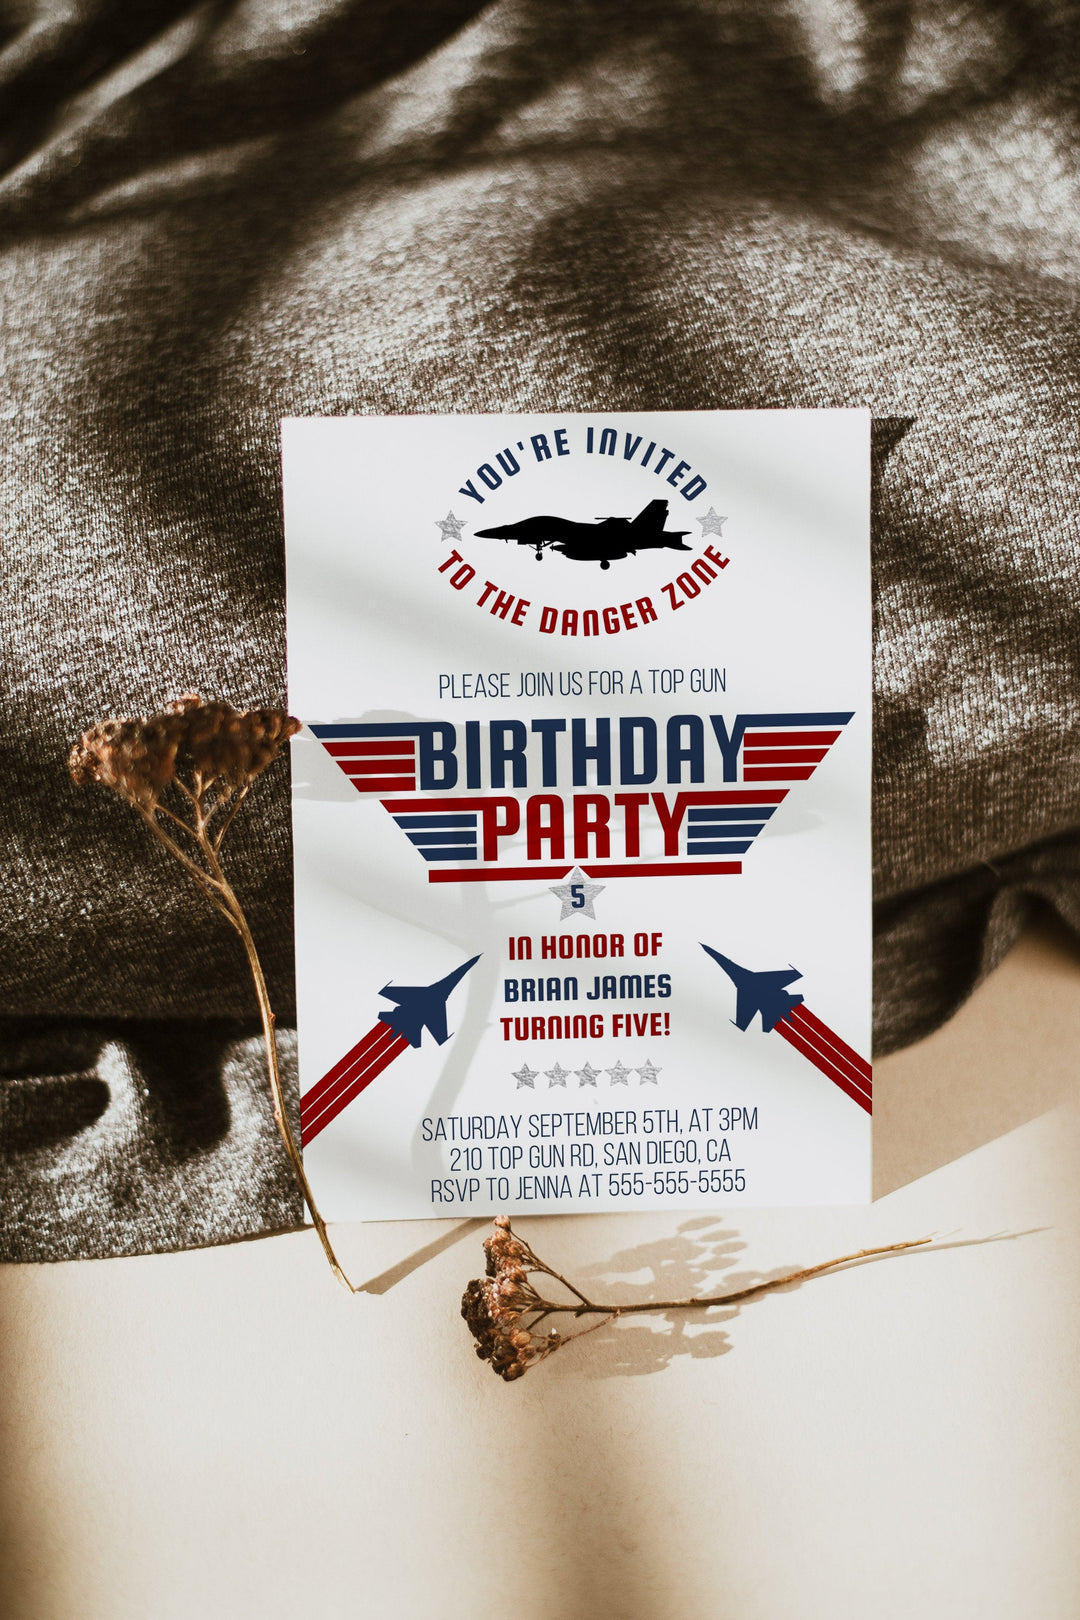 Fighter Pilot Birthday Invitation - Top Gun Birthday Party - Fighter Jet Pilot Birthday Game - Top Gun Birthday Invitation Suite - Top Gun